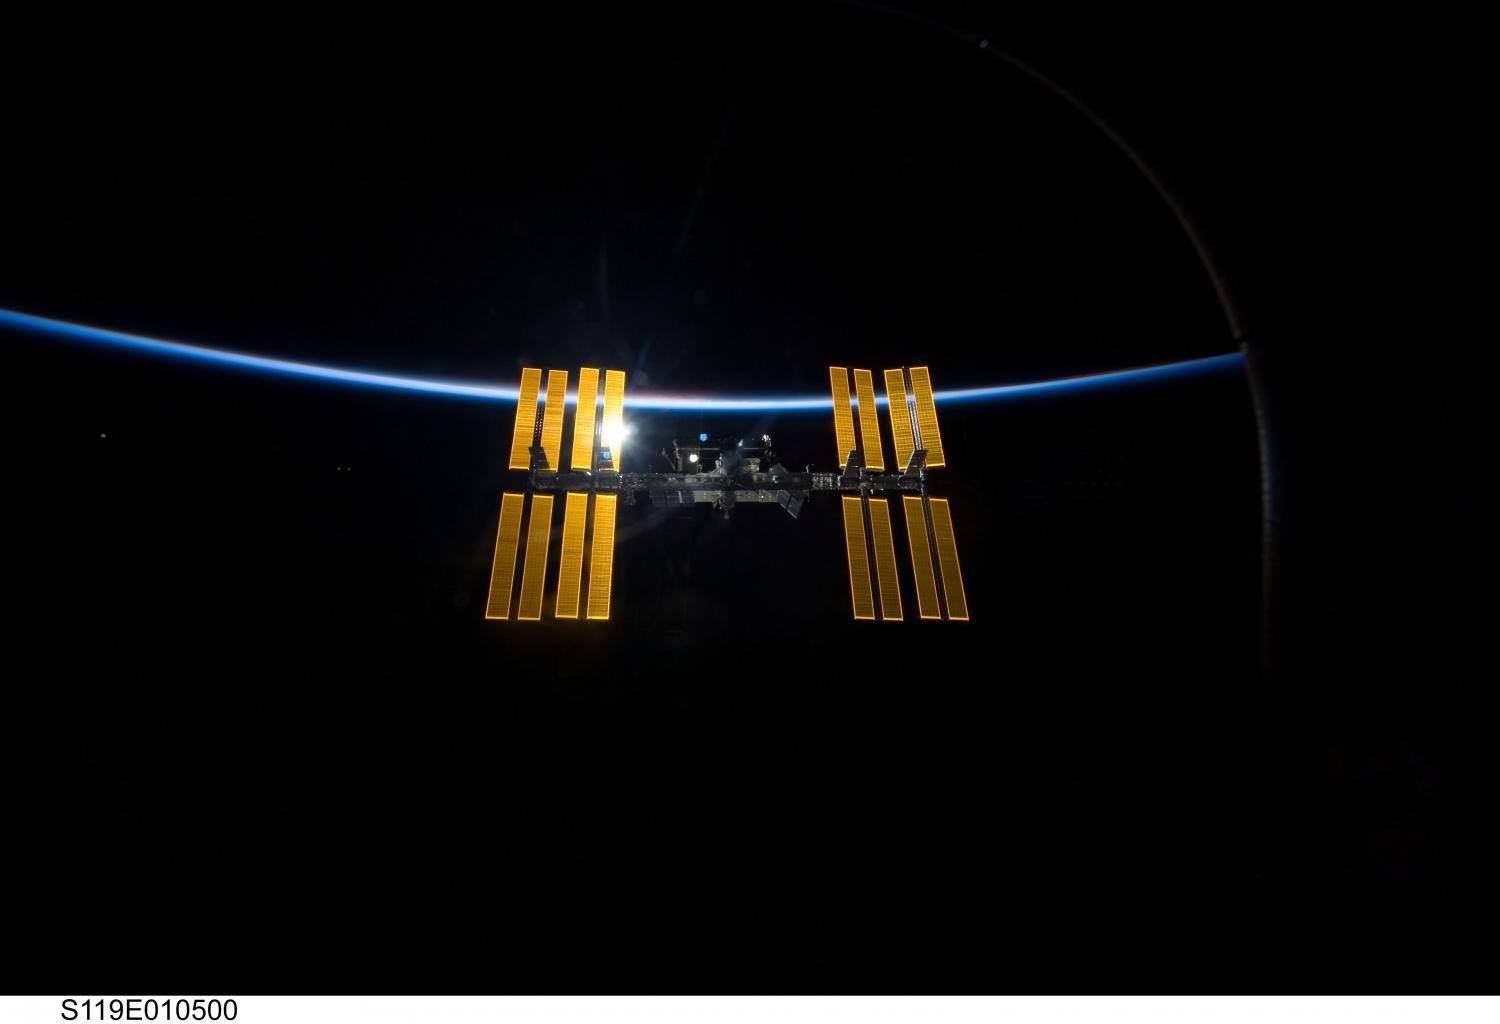 Crew of three docks at International Space Station